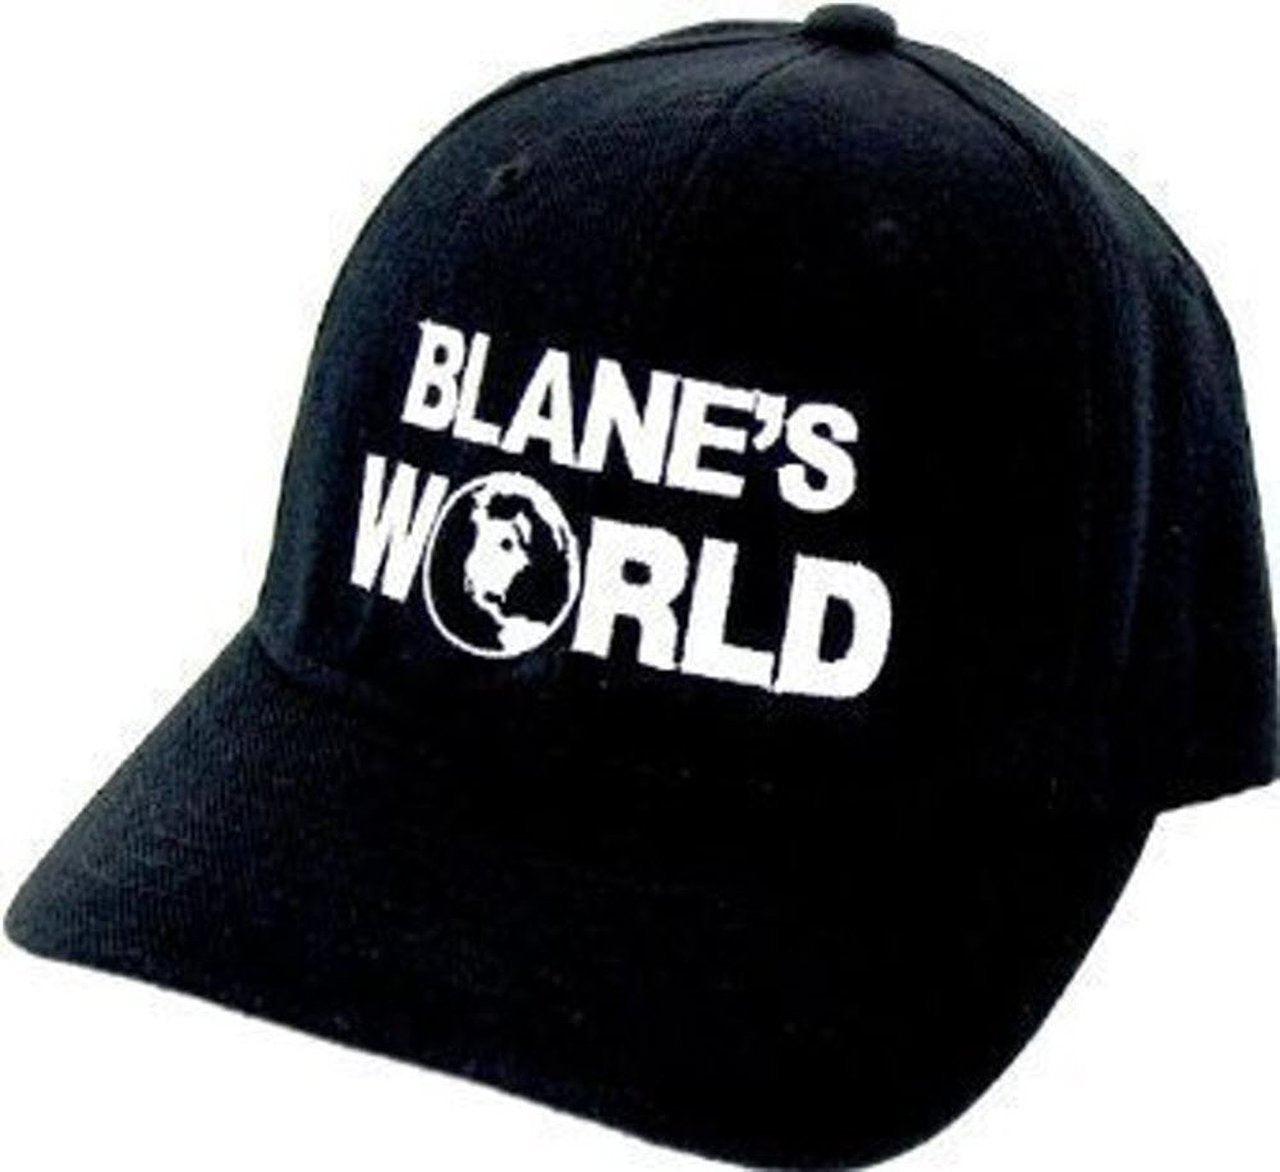 Blake Blane's World Fitted Black Baseball Cap Hat-tvso